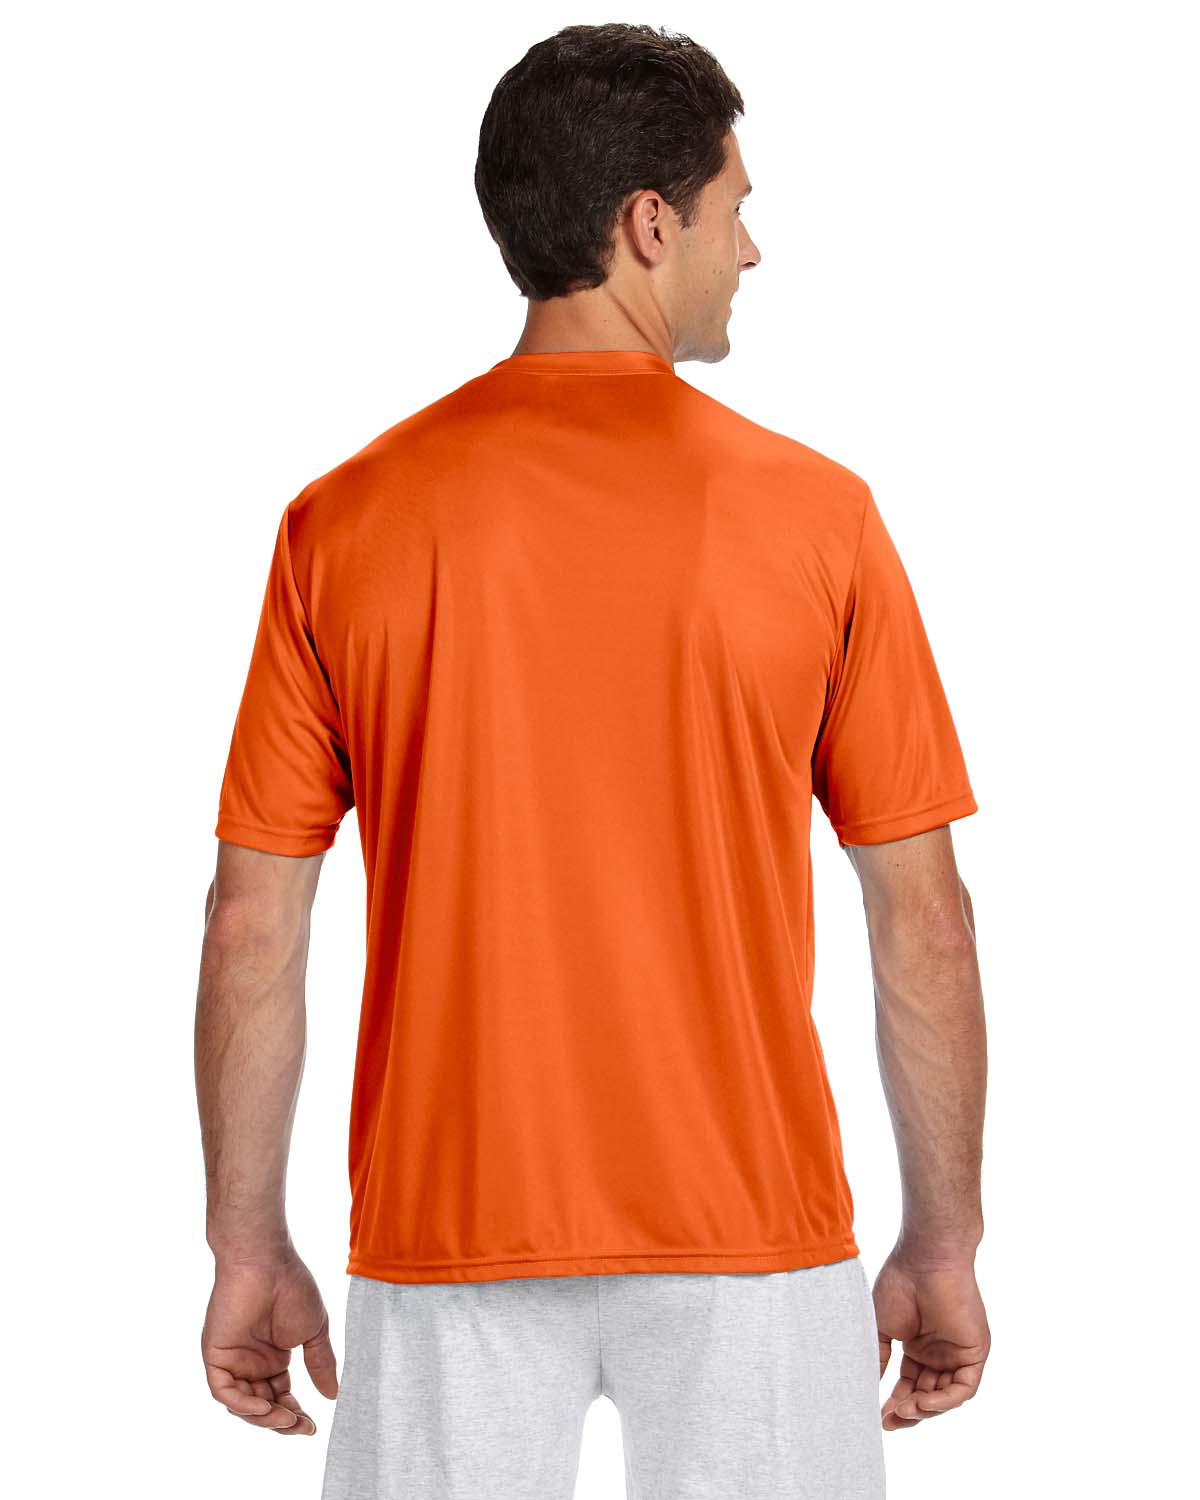 A4 Men's Short-Sleeve Cooling Performance Crew T-Shirt, Cardinal, S